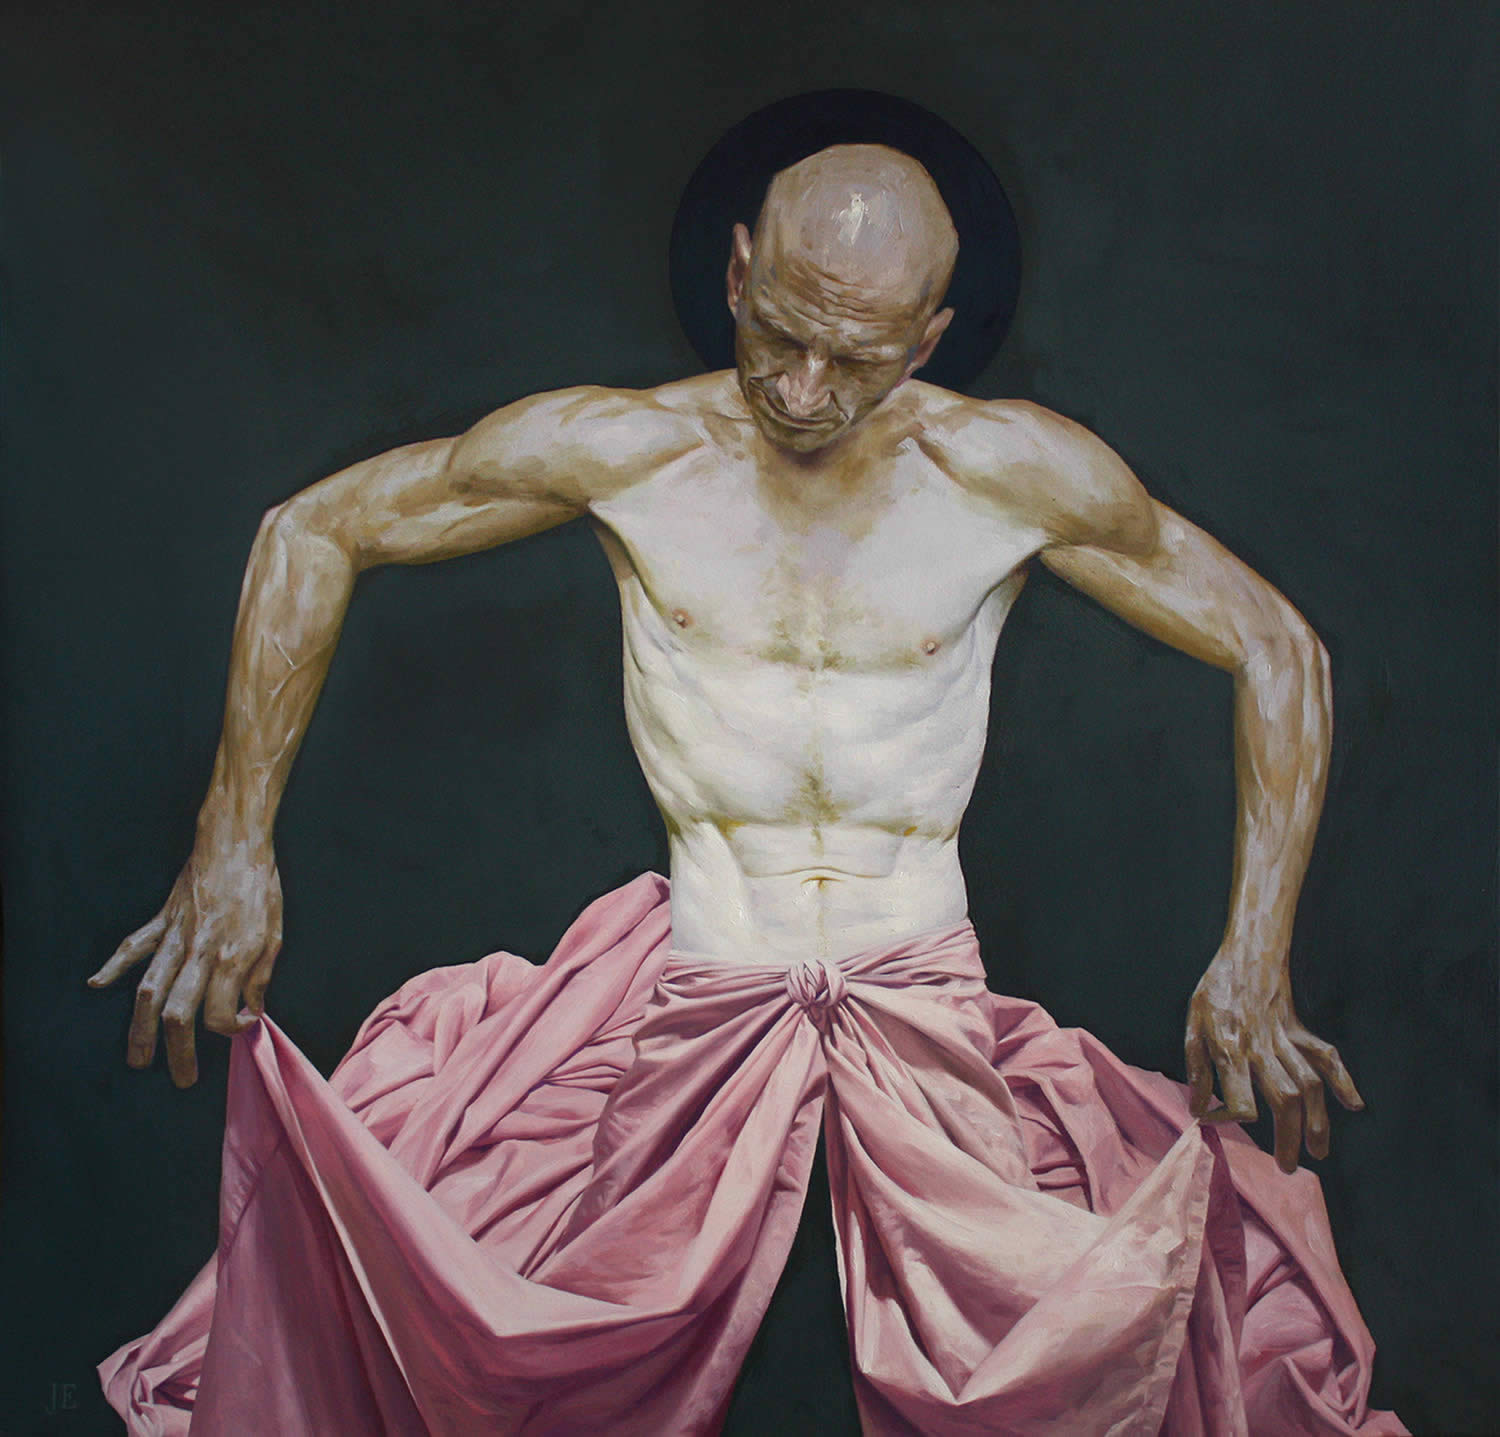 shirtless man with pink cloth around waist